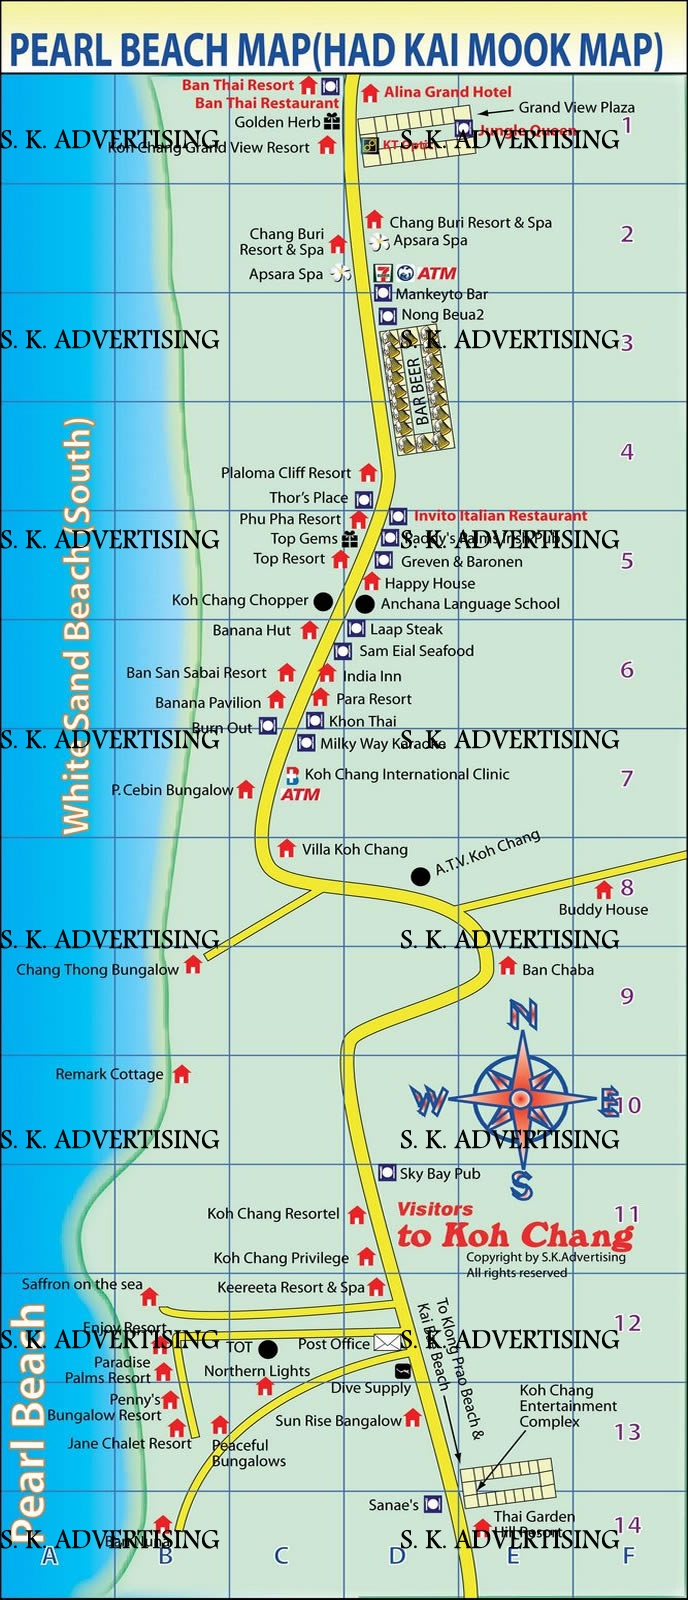 Pearl Beach (Kai Mook) Map, Koh Chang